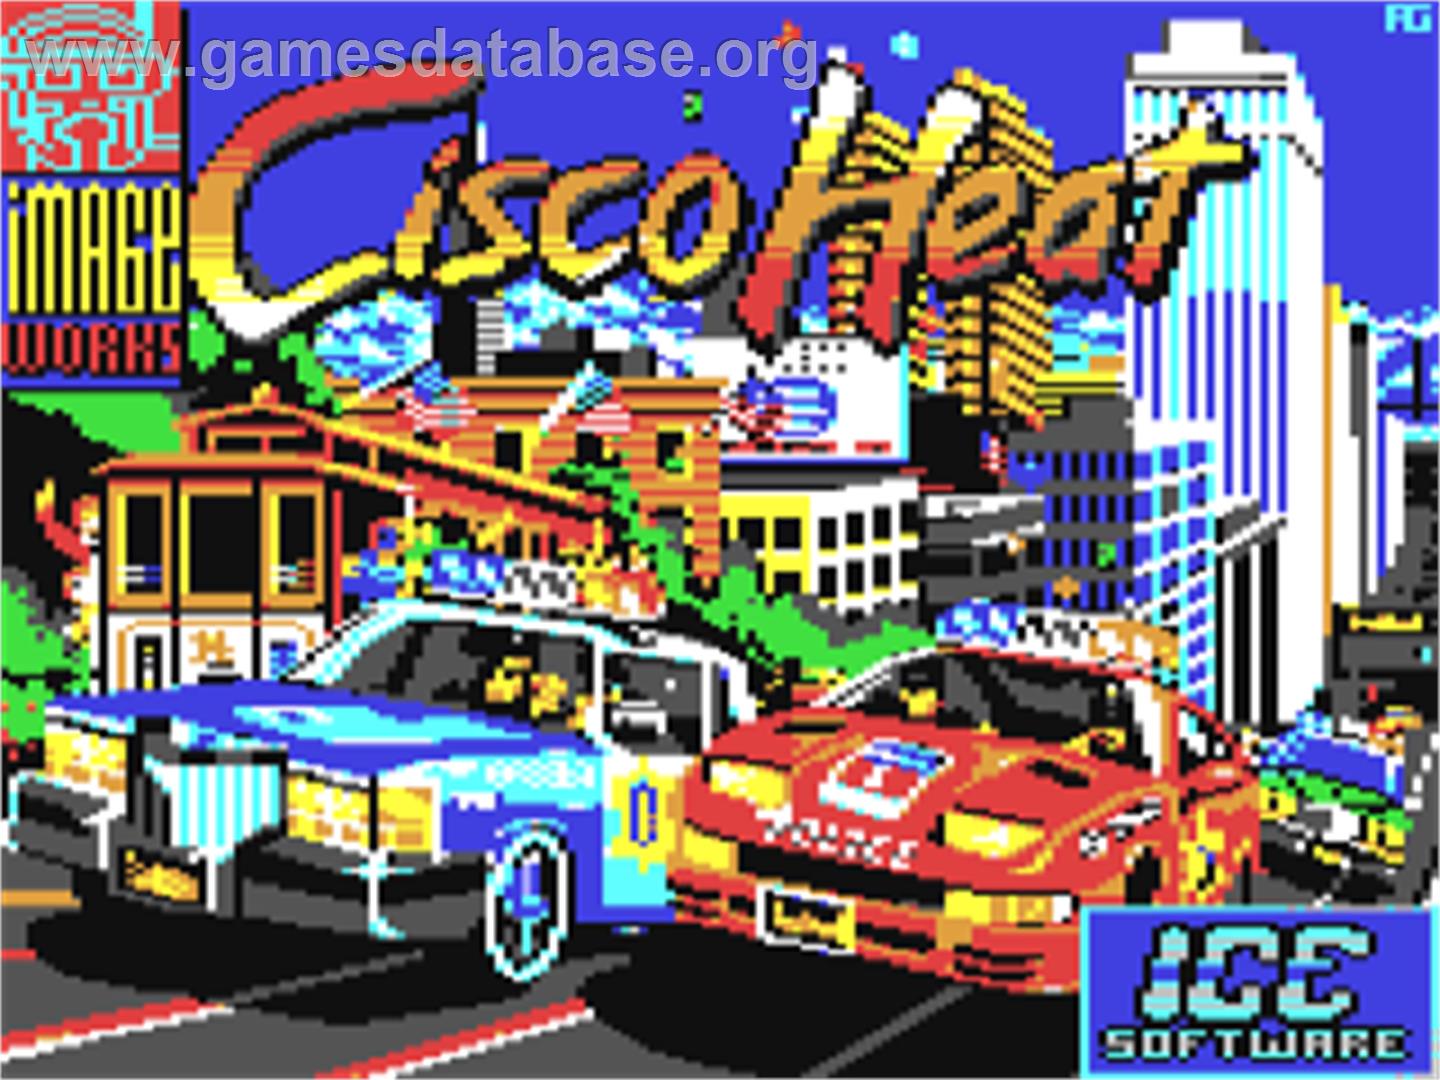 Cisco Heat: All American Police Car Race - Commodore 64 - Artwork - Title Screen